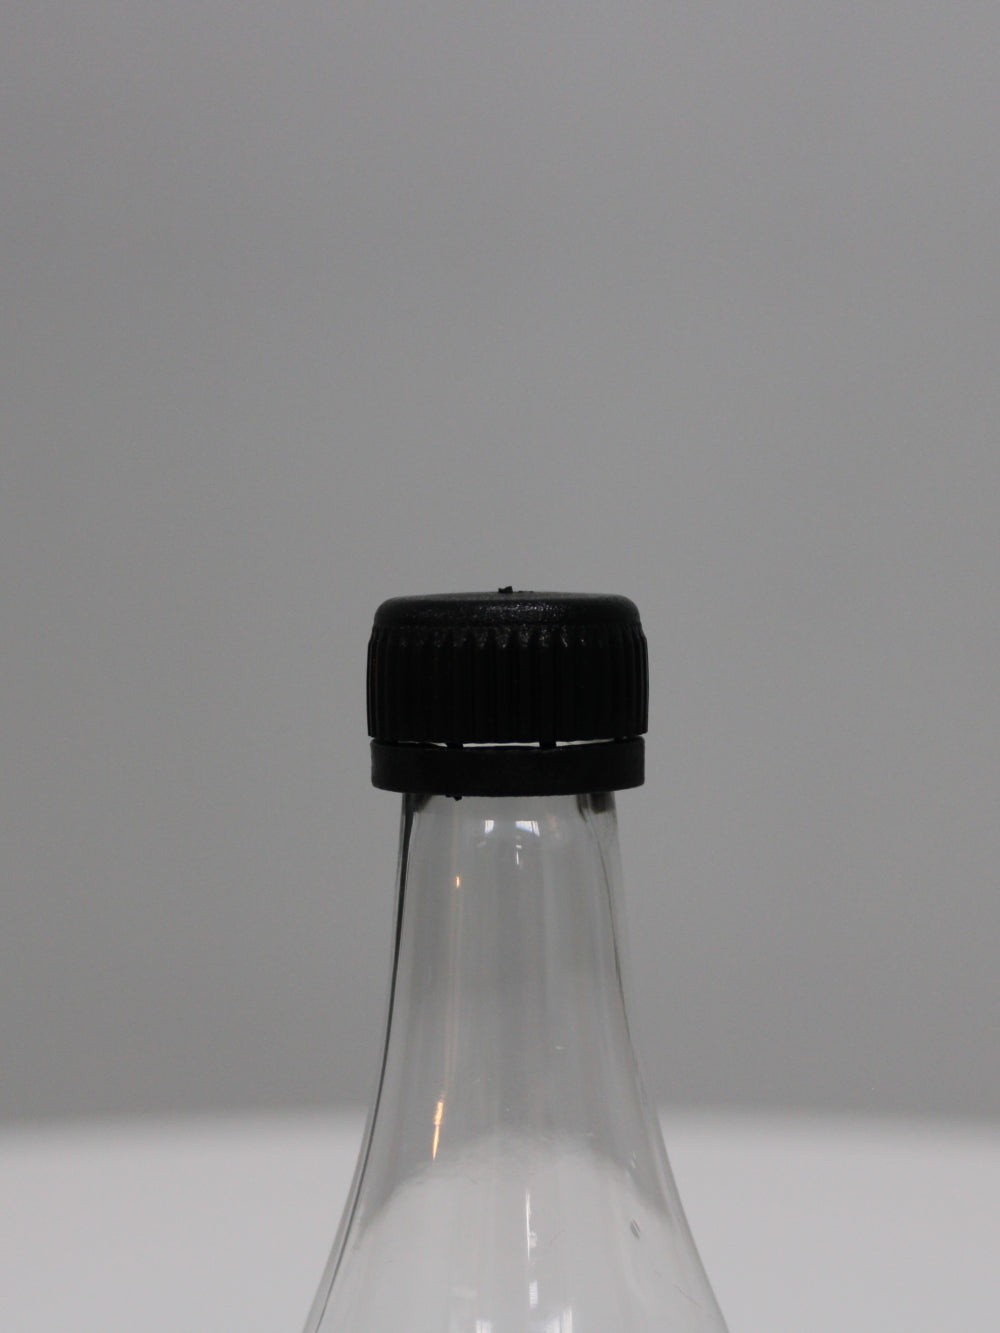 50ml Glycerine PET Bottle - (Pack of 100 units)